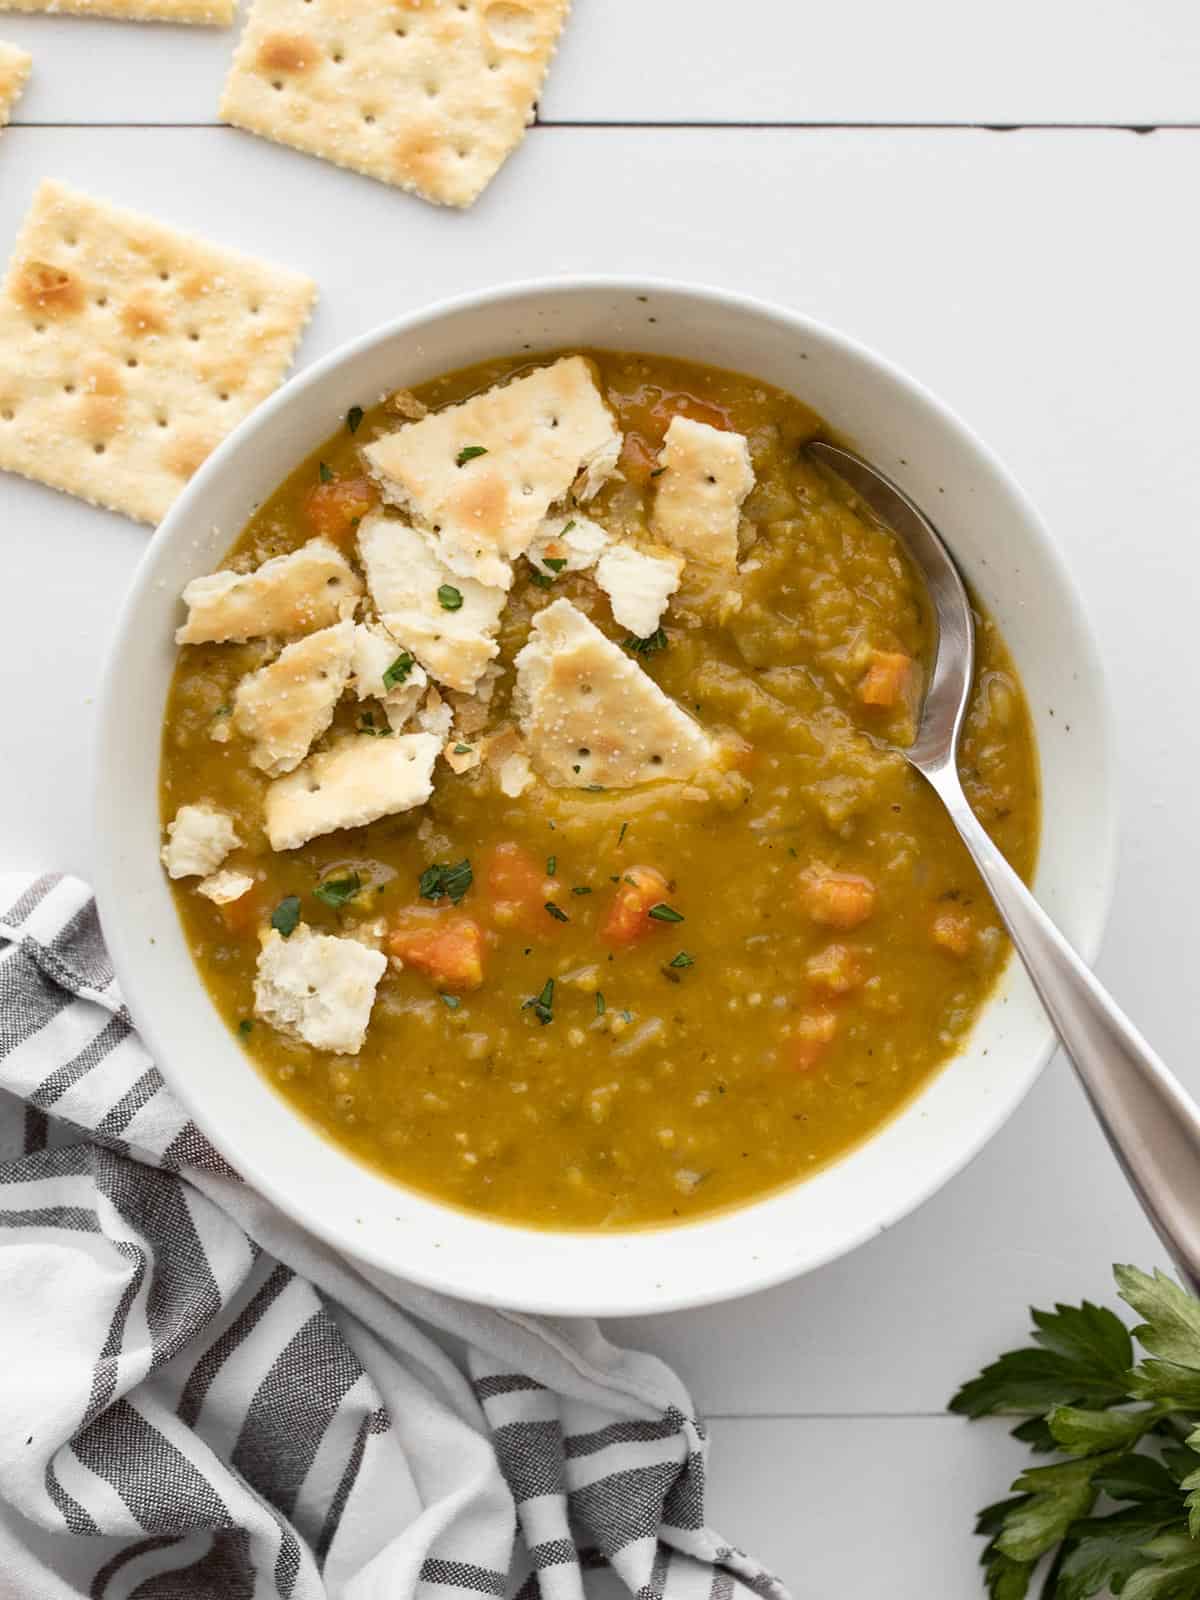 Crock Pot Split Pea Soup recipe - Eating on a Dime